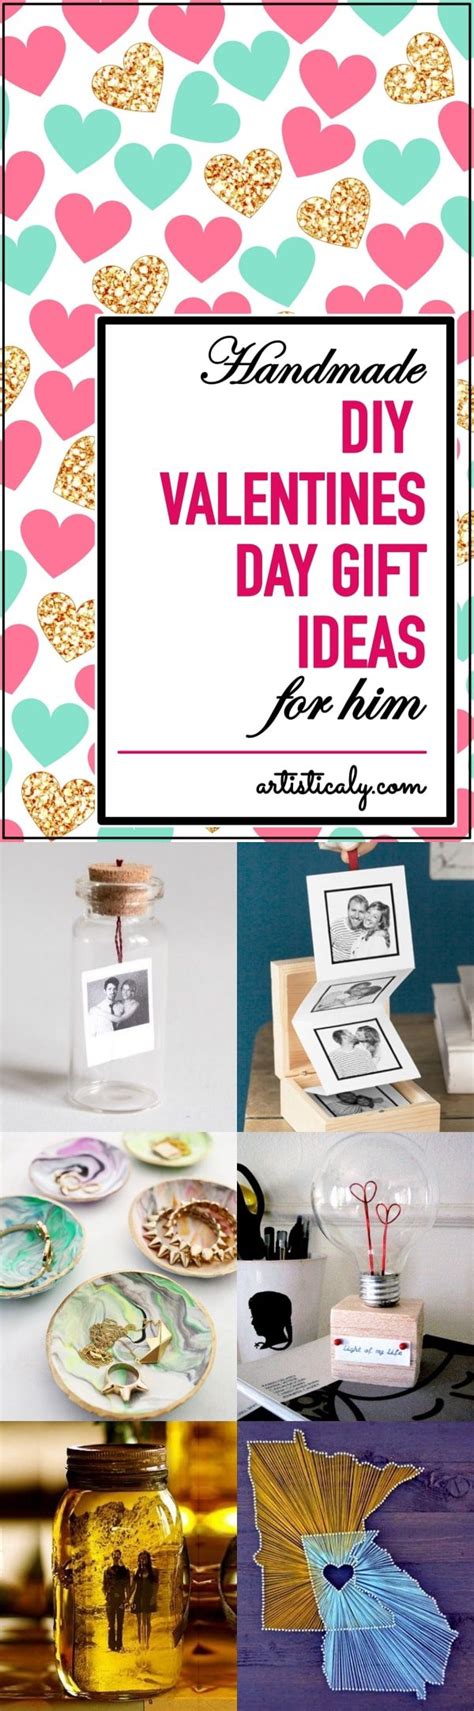 29 Handmade DIY Valentine S Day Gift Ideas For Him Artisticaly